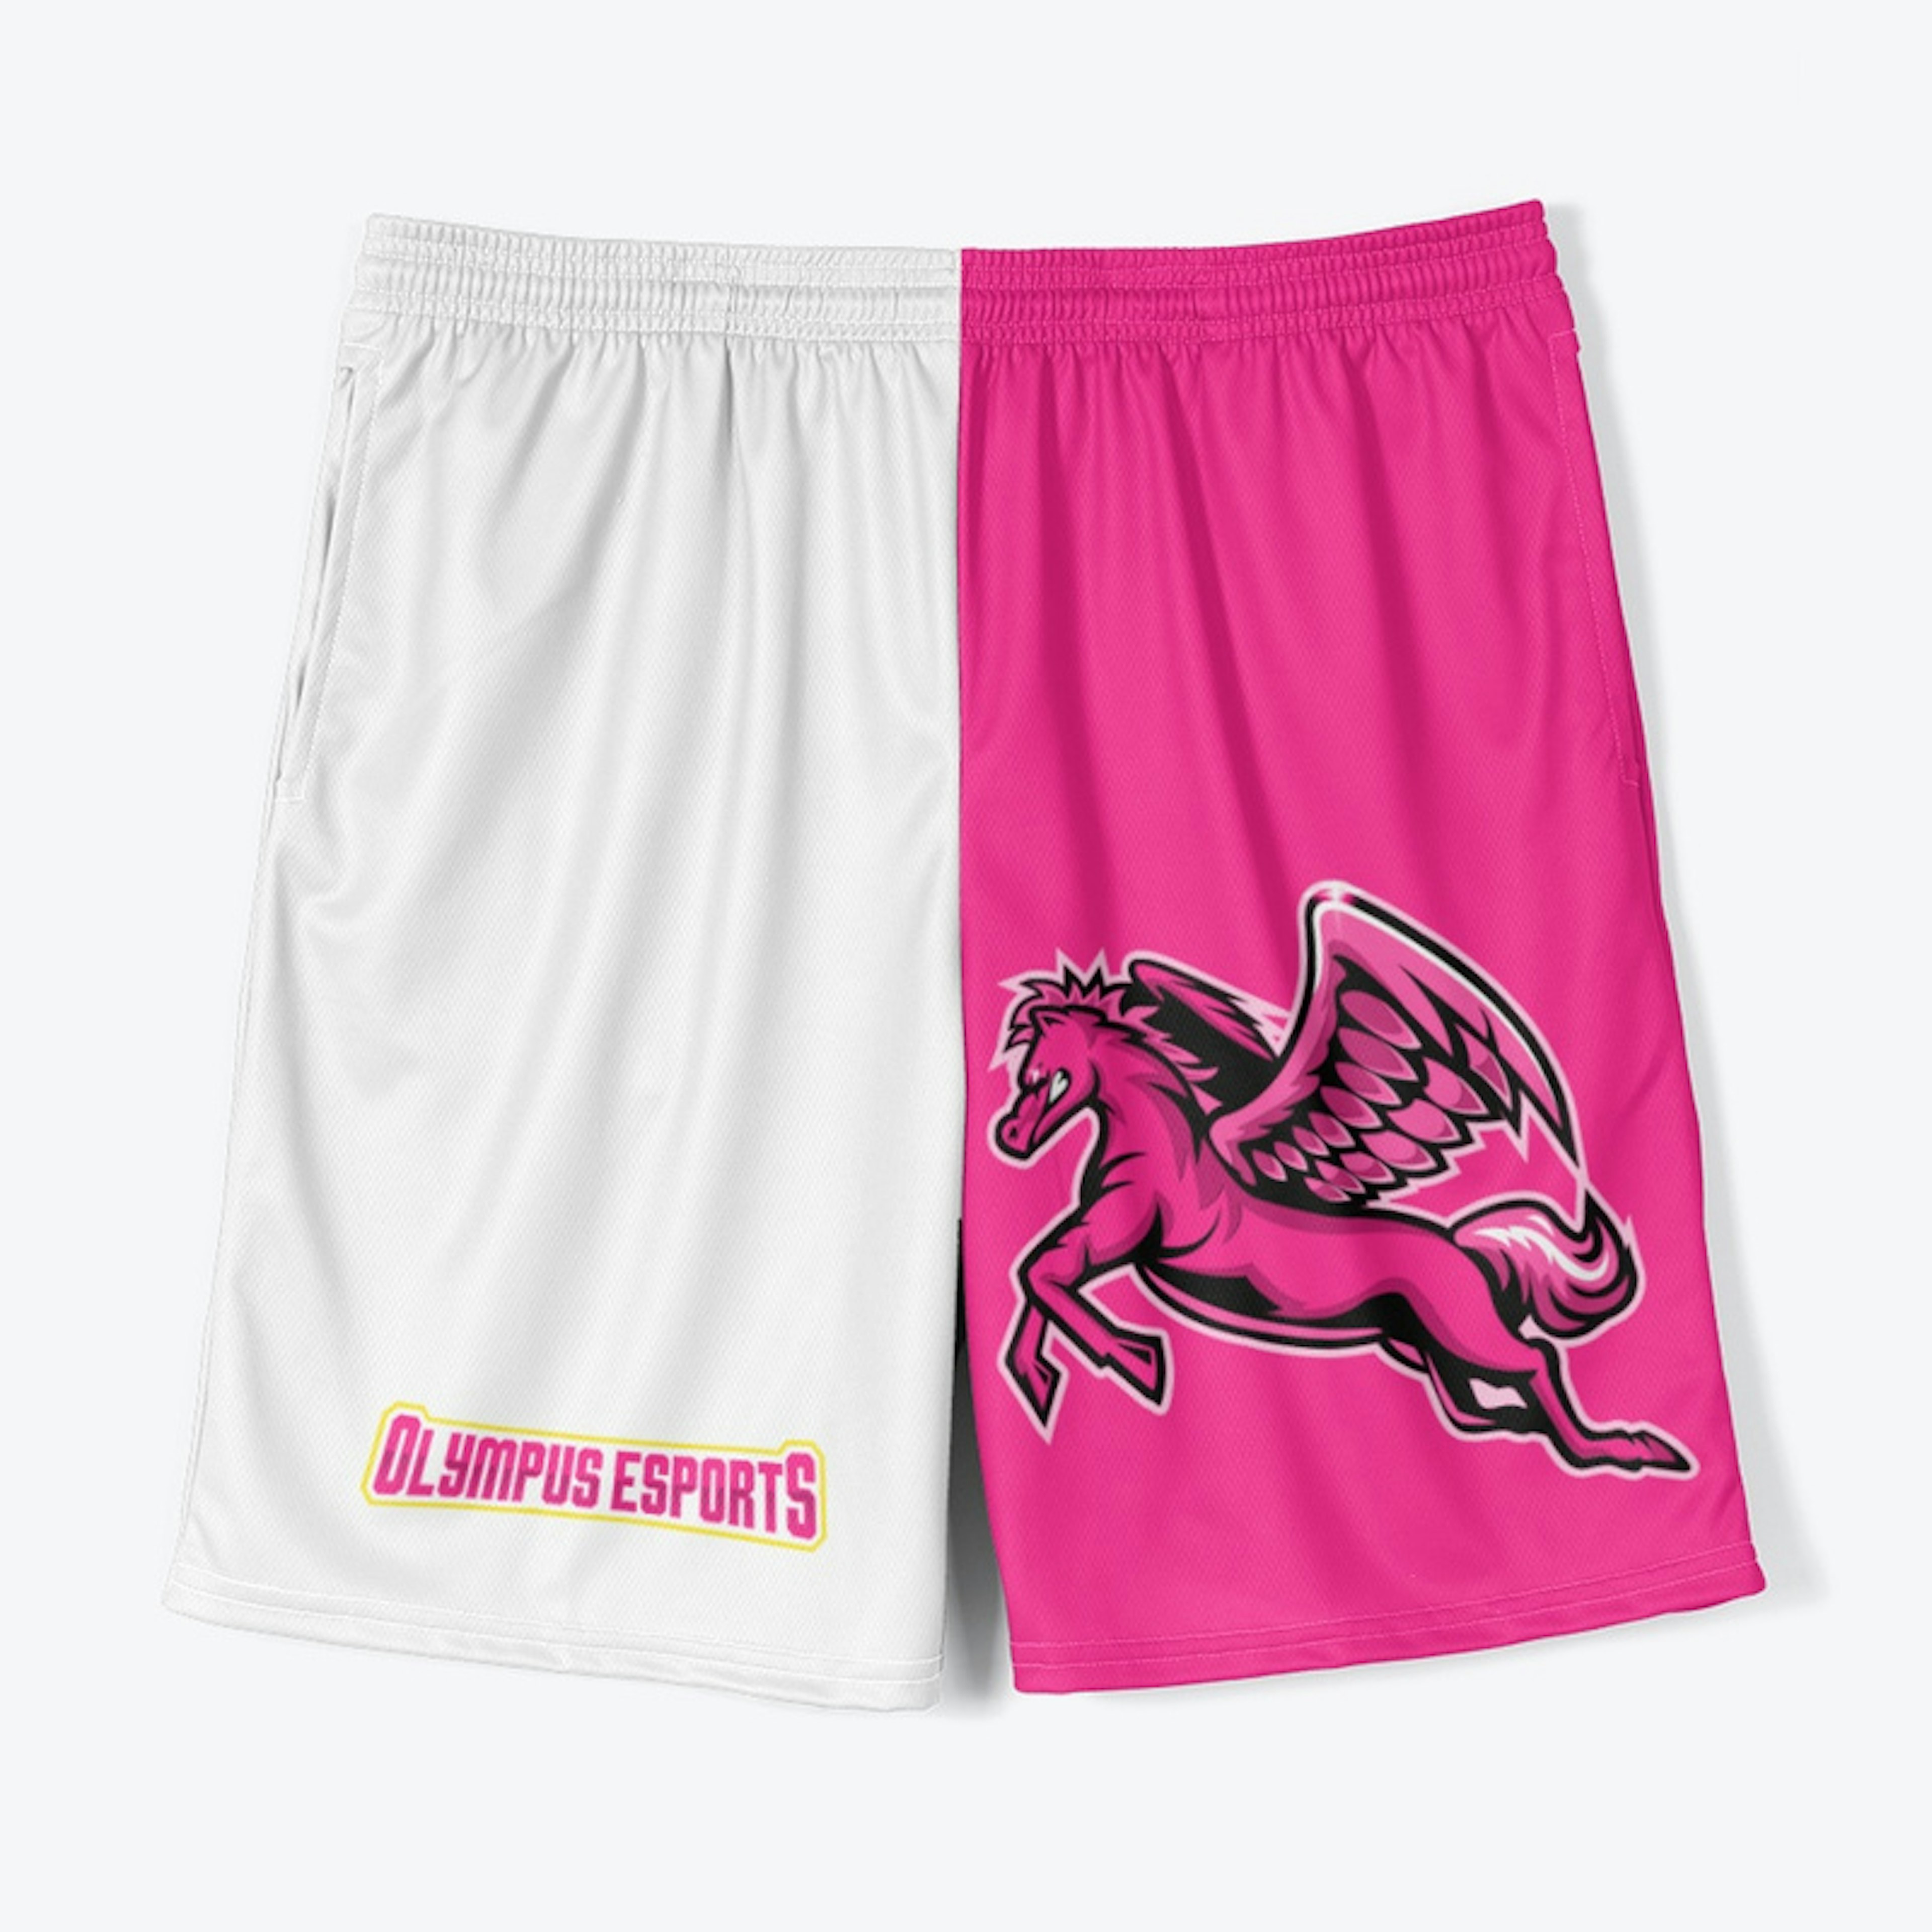 team shorts pink